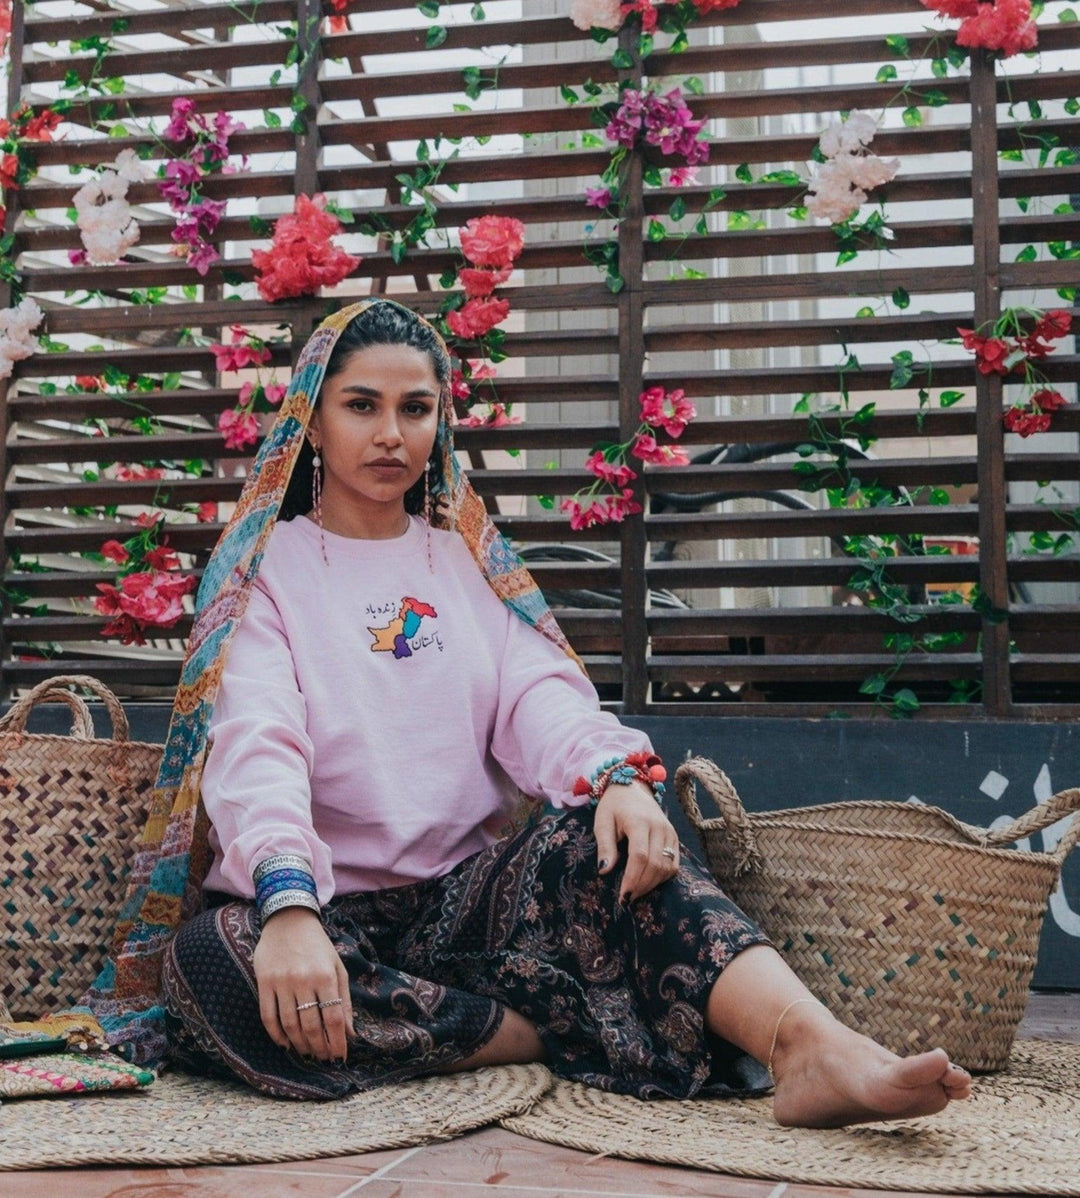 Embroidered Pakistan Zindabad - Sweater - Native Threads Palestine clothing